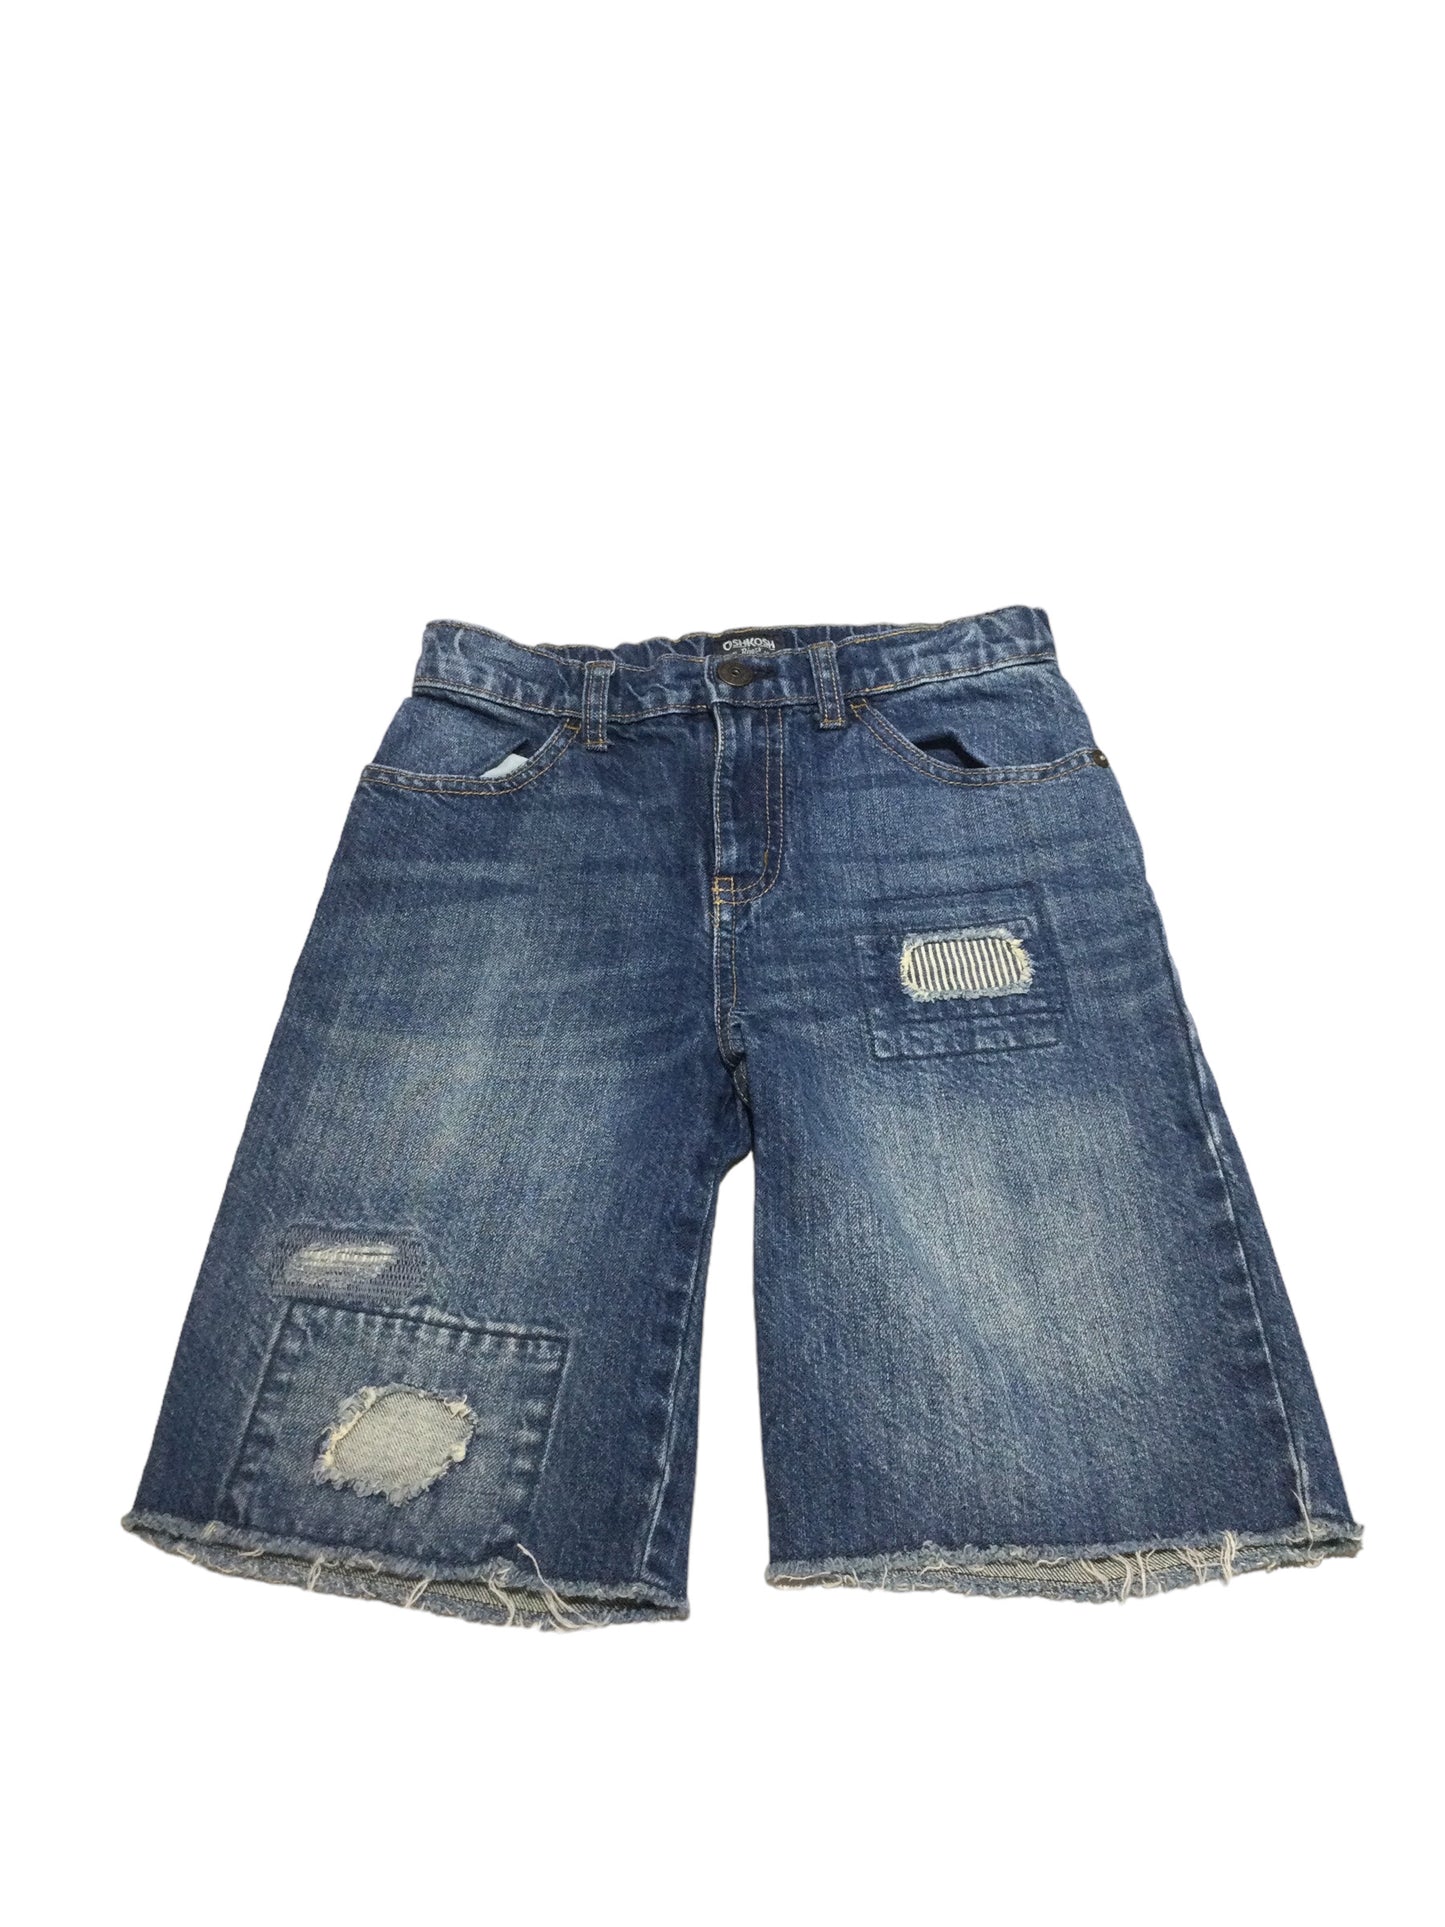 Jean Shorts, size 10